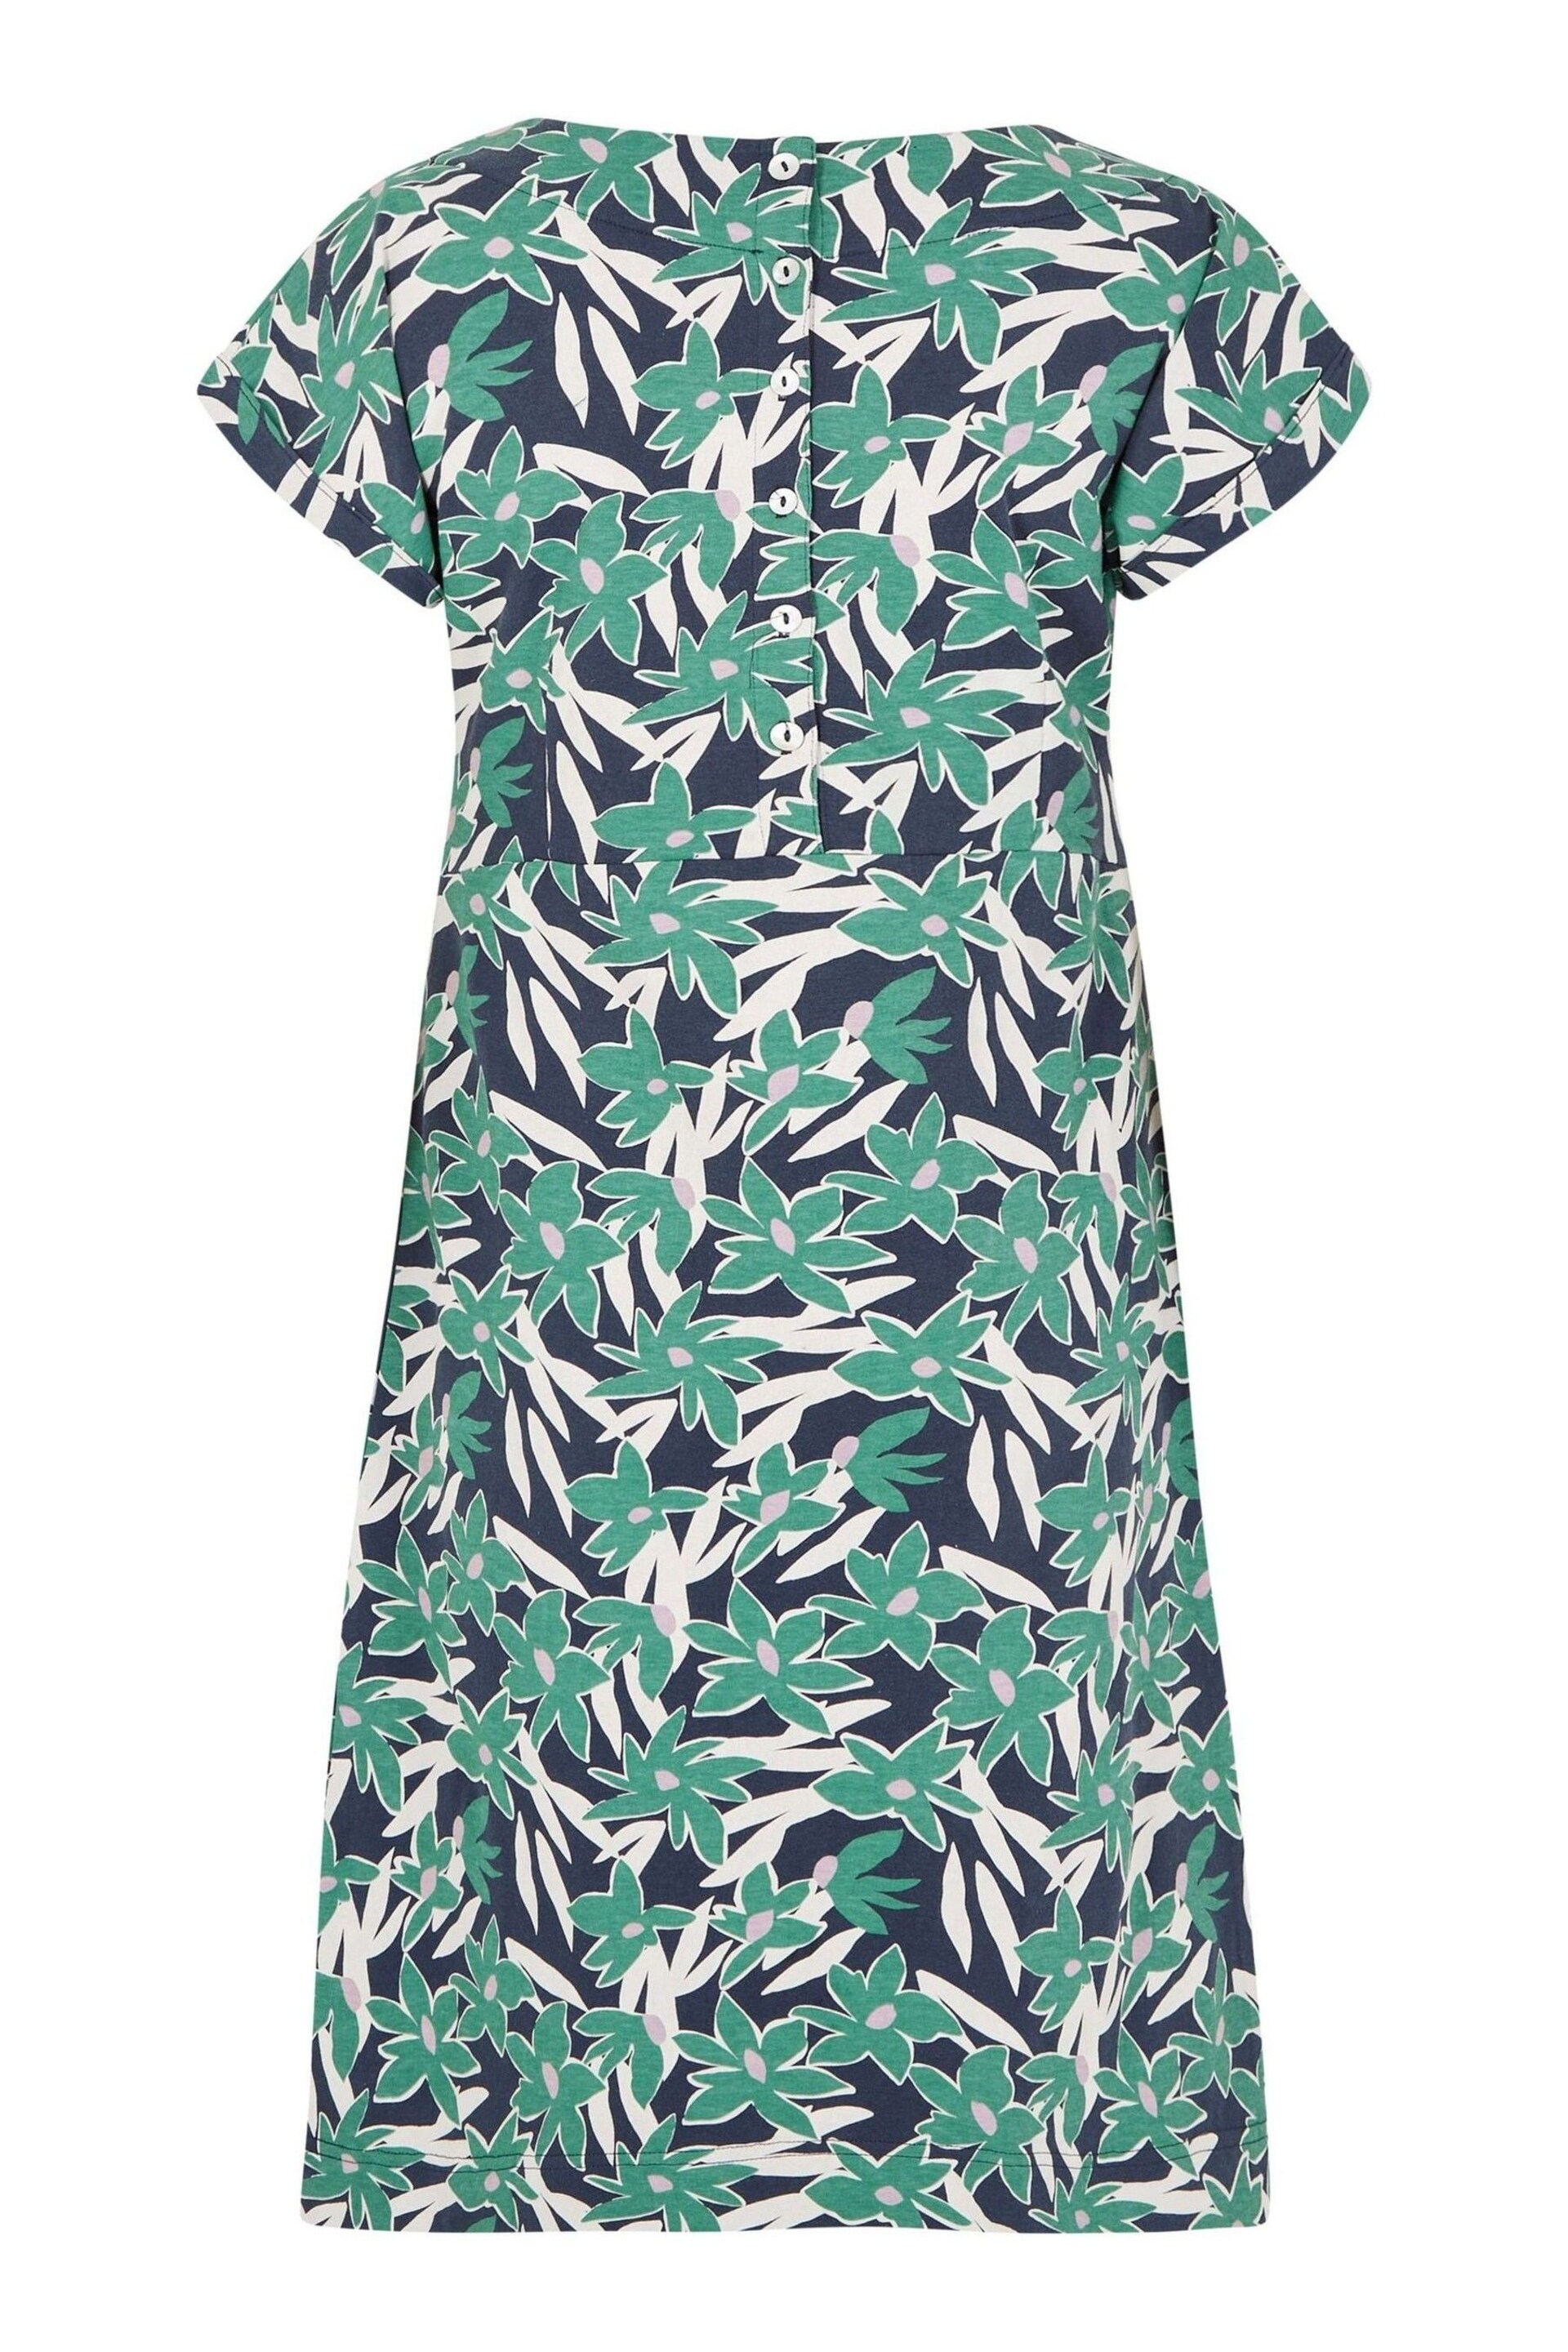 Weird Fish Tallahassee Organic Printed Jersey Dress - Image 6 of 6